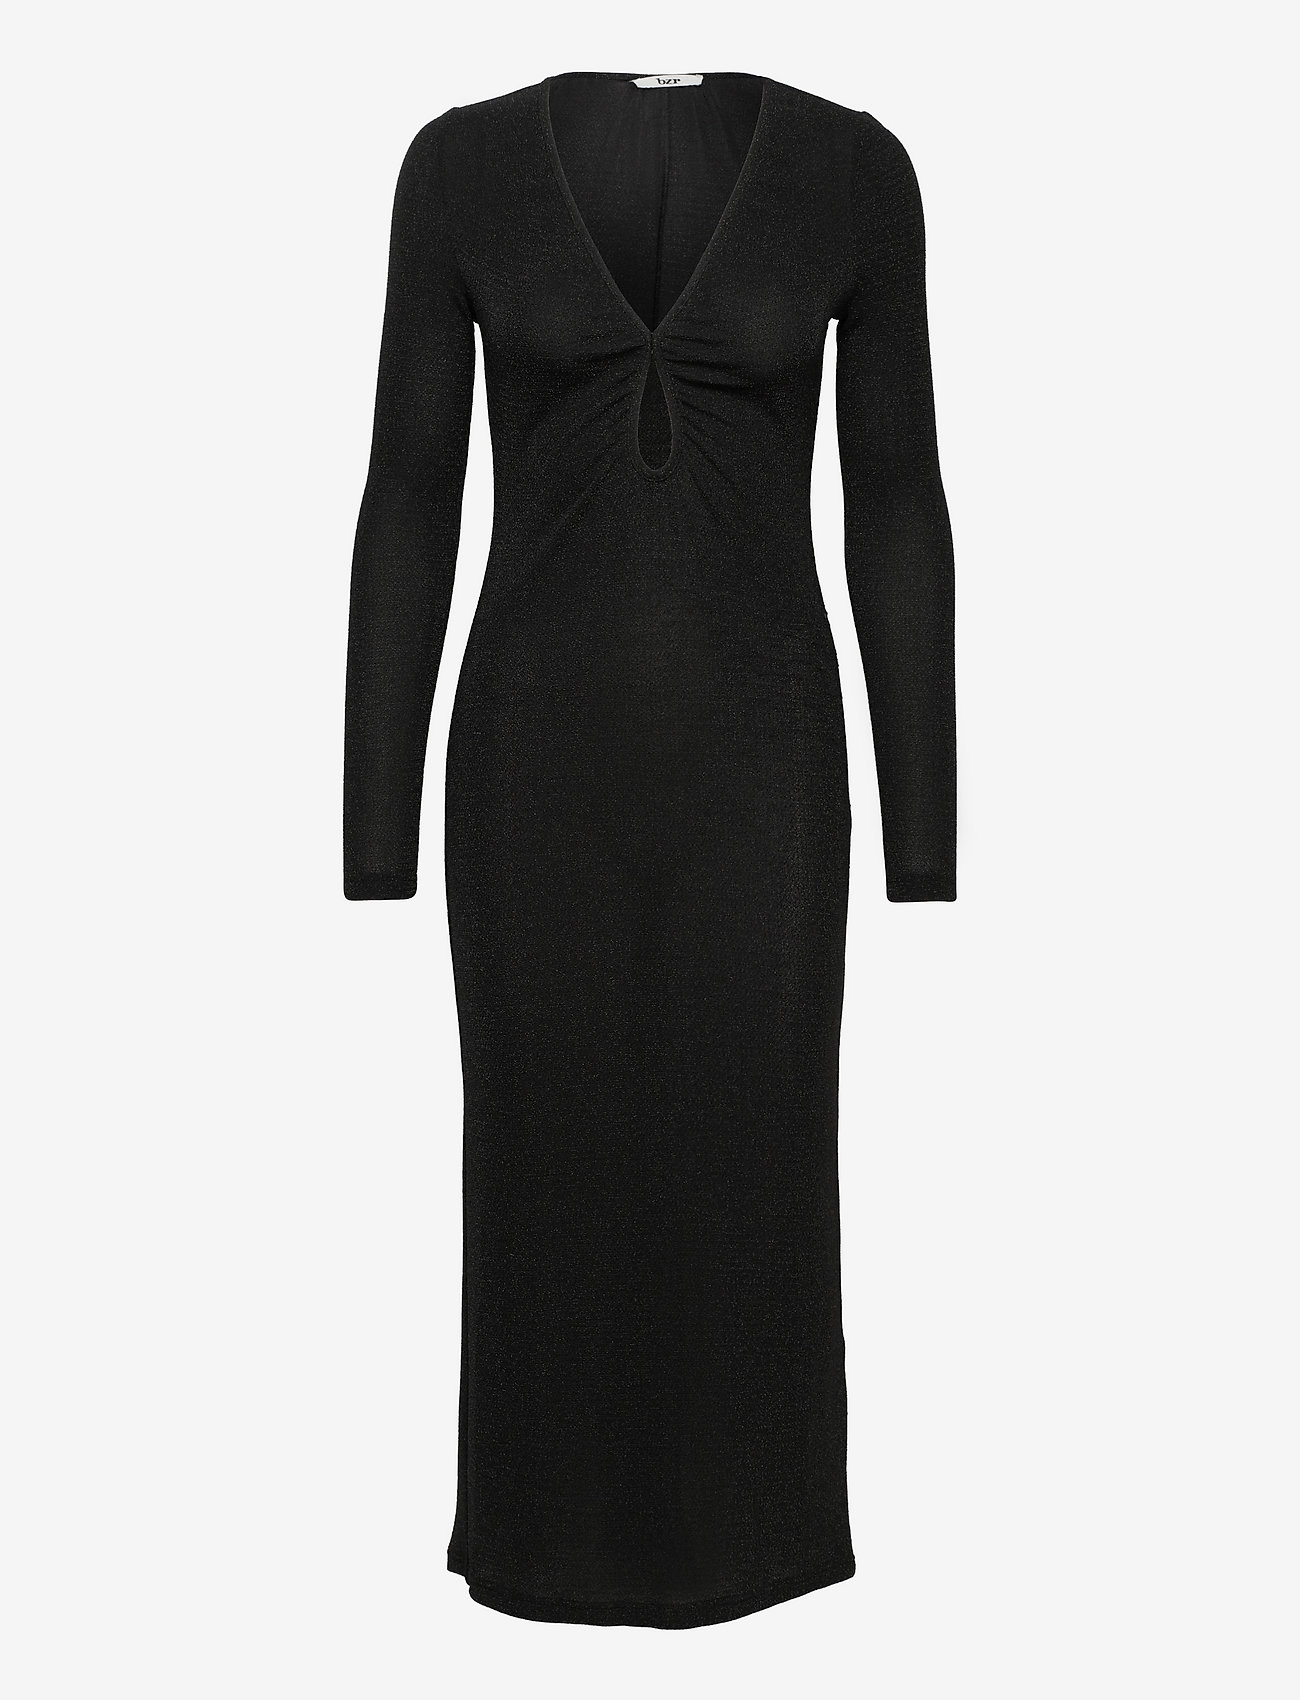 bzr - Luella Ida dress - etuikleider - black - 0